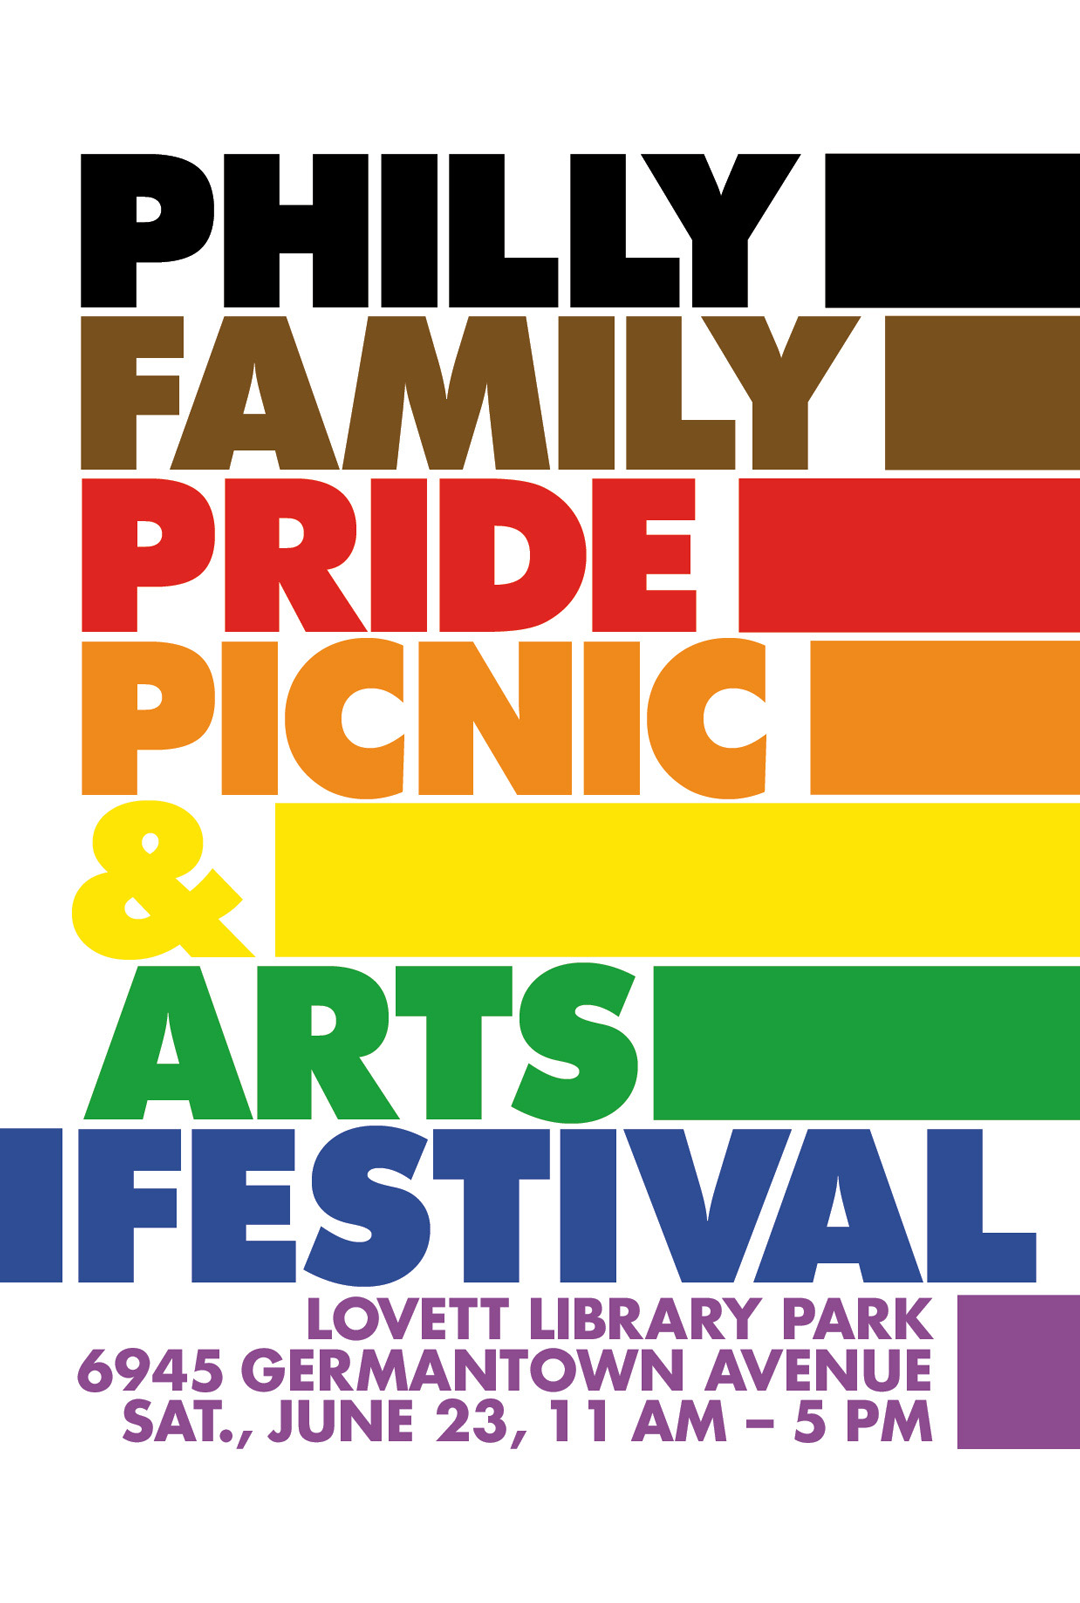 Philly Family Pride Picnic & Arts Festival - Poster Design